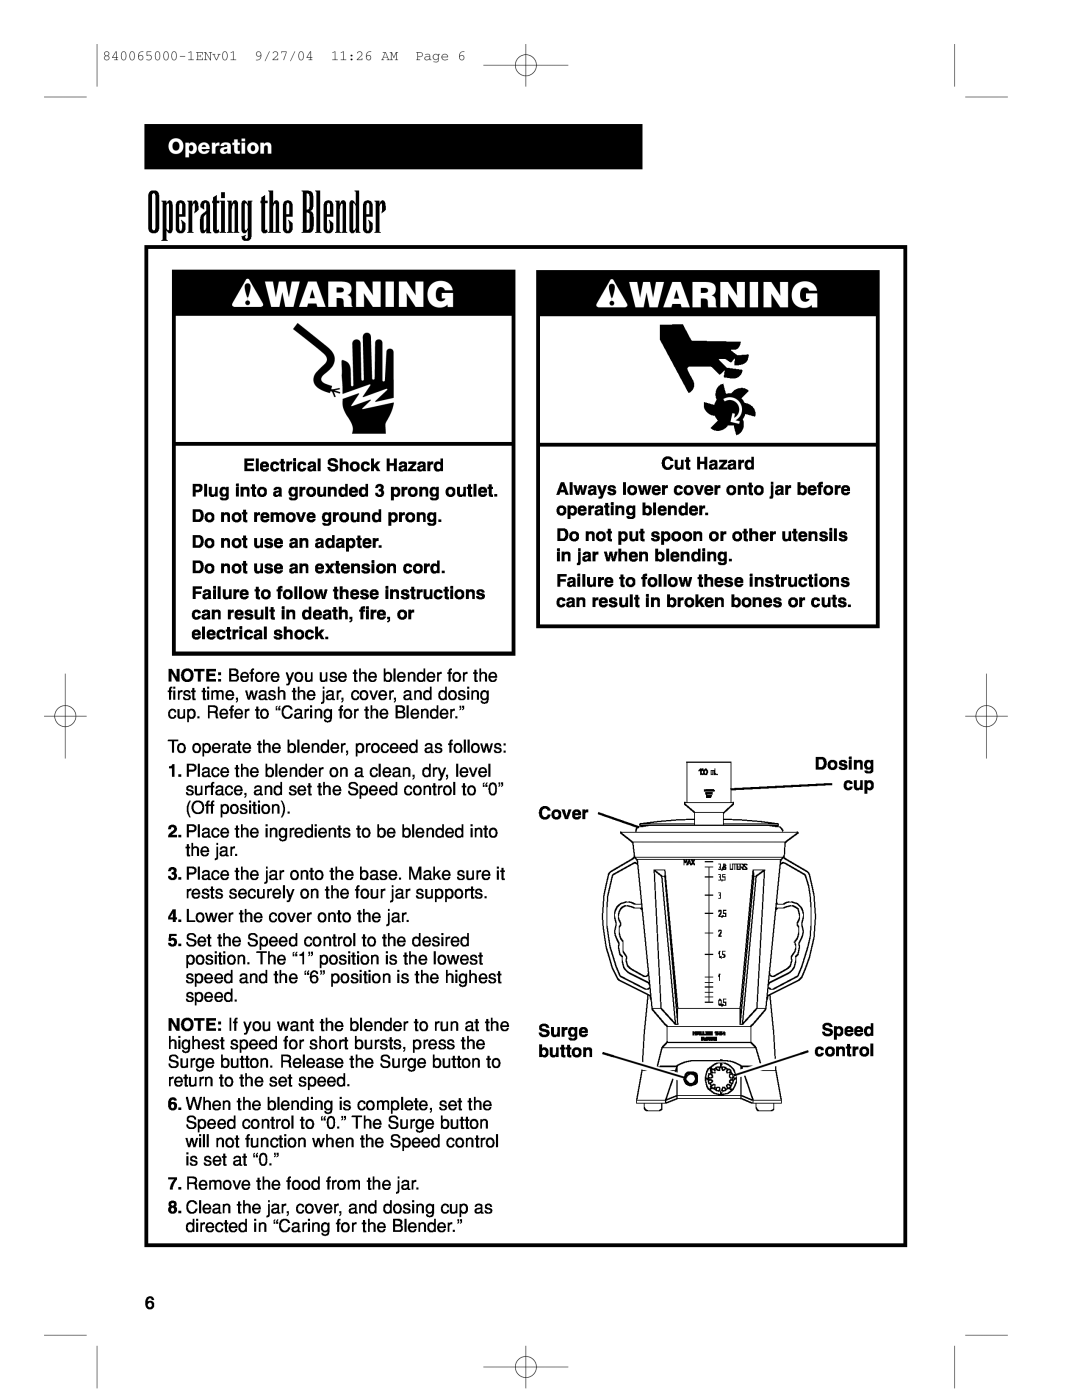 Proctor-Silex 994 operation manual Operating the Blender, Operation, wWARNING 